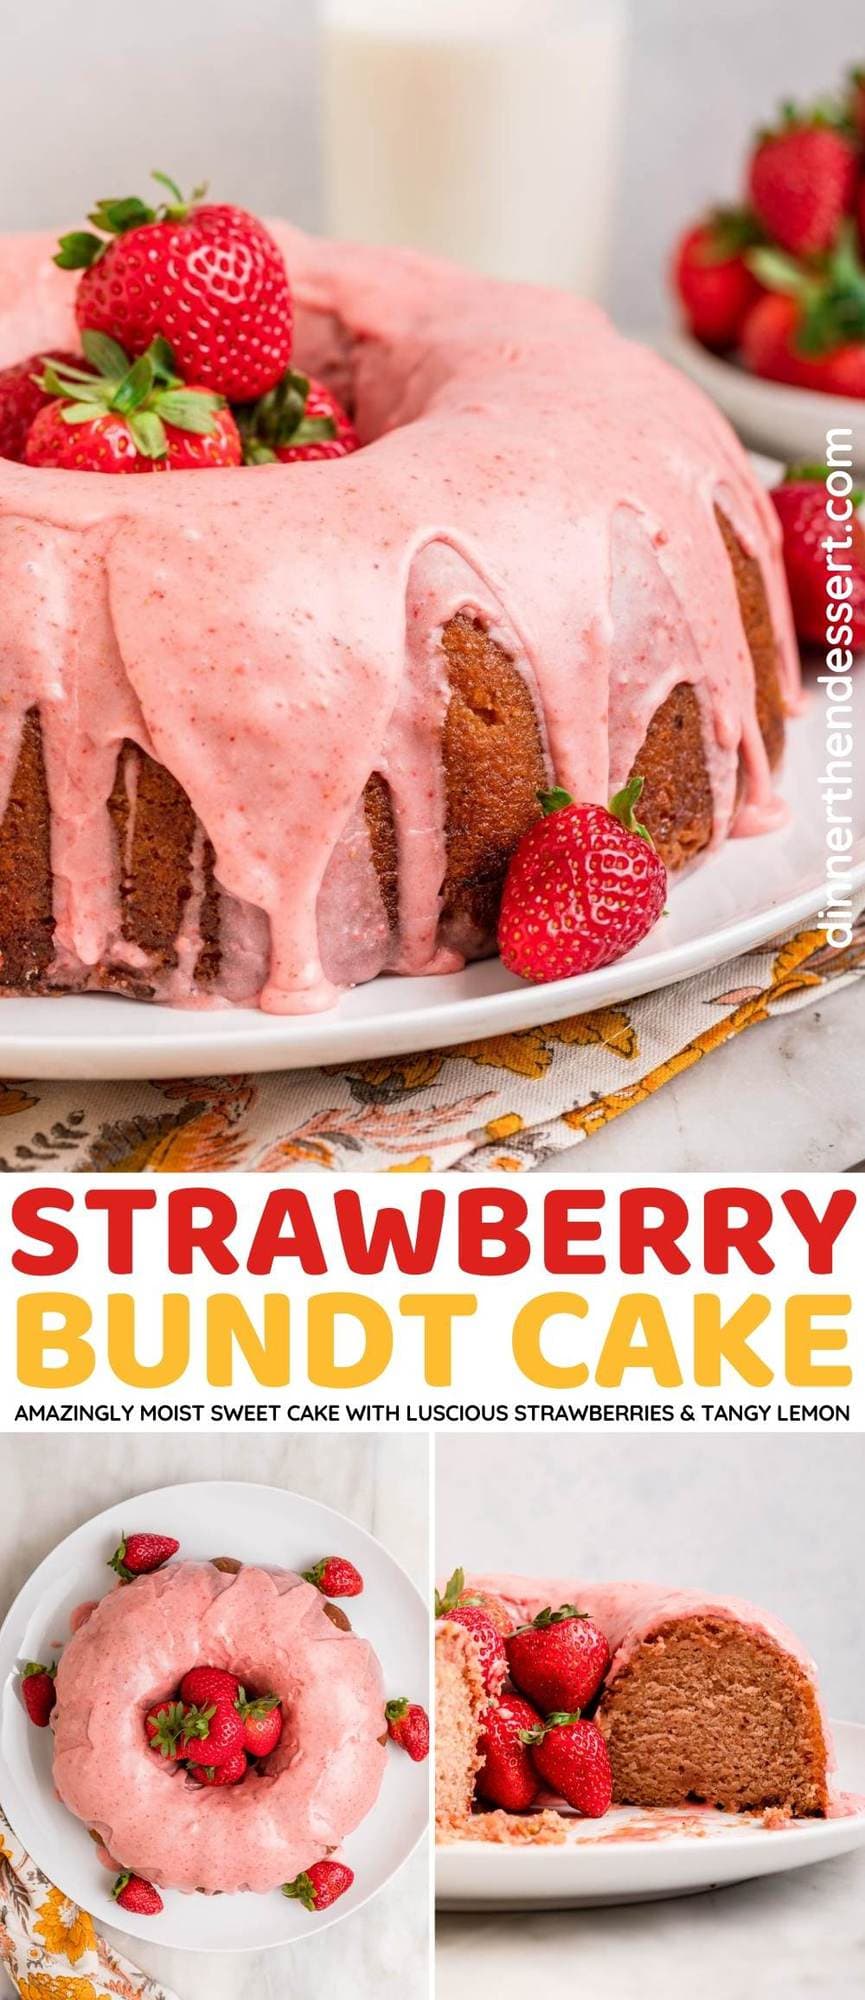 Strawberry Bundt Cake collage